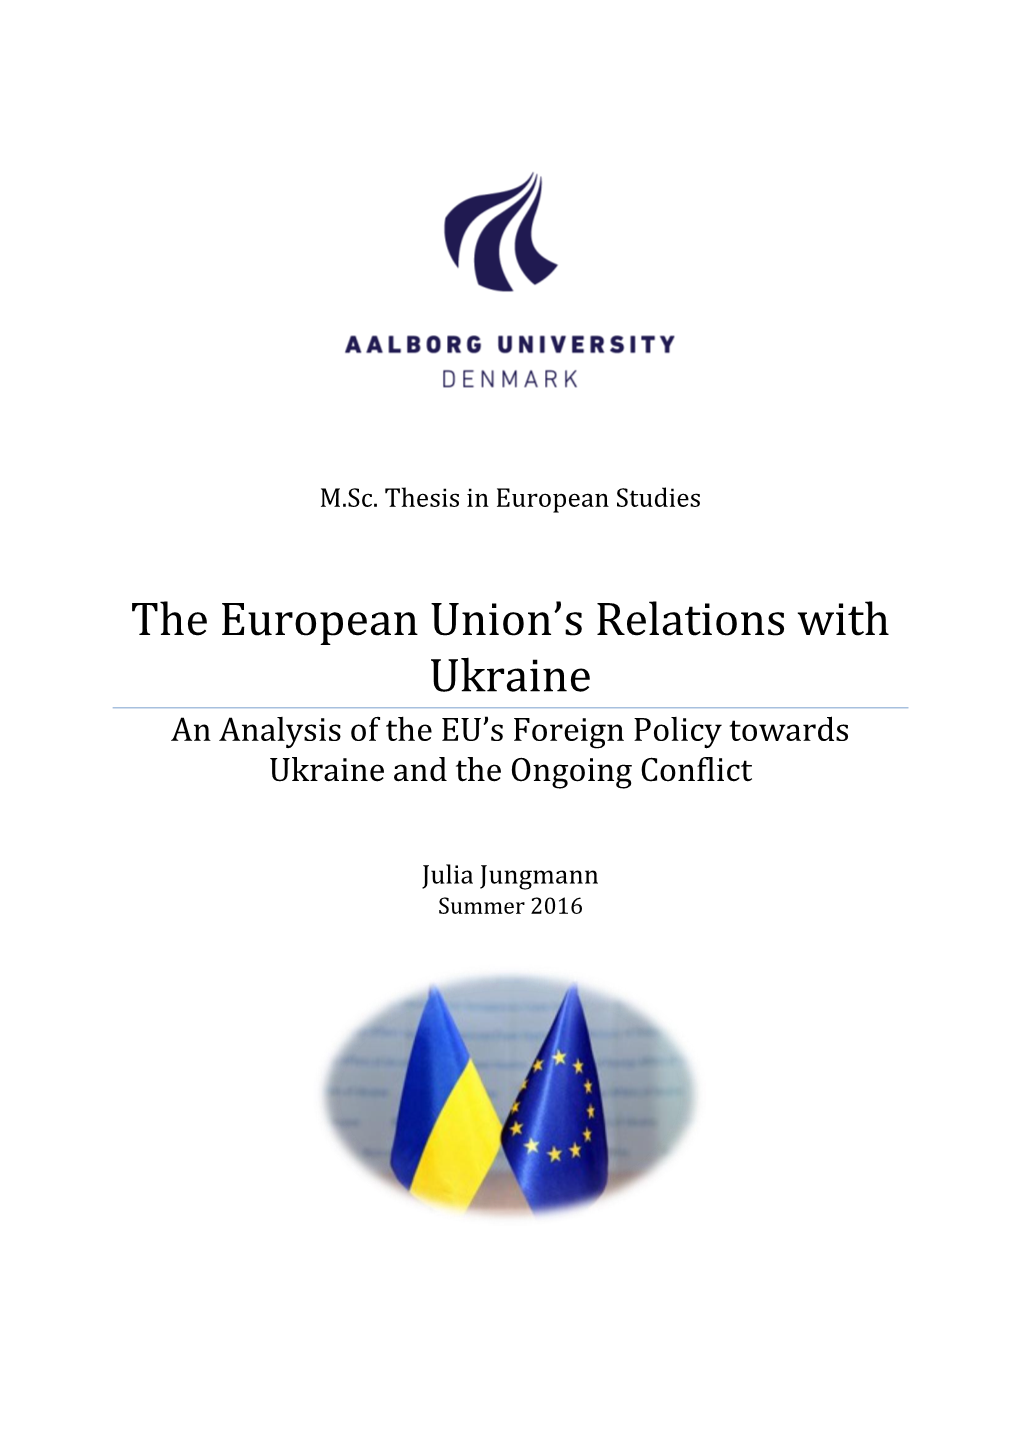 The European Union's Relations with Ukraine